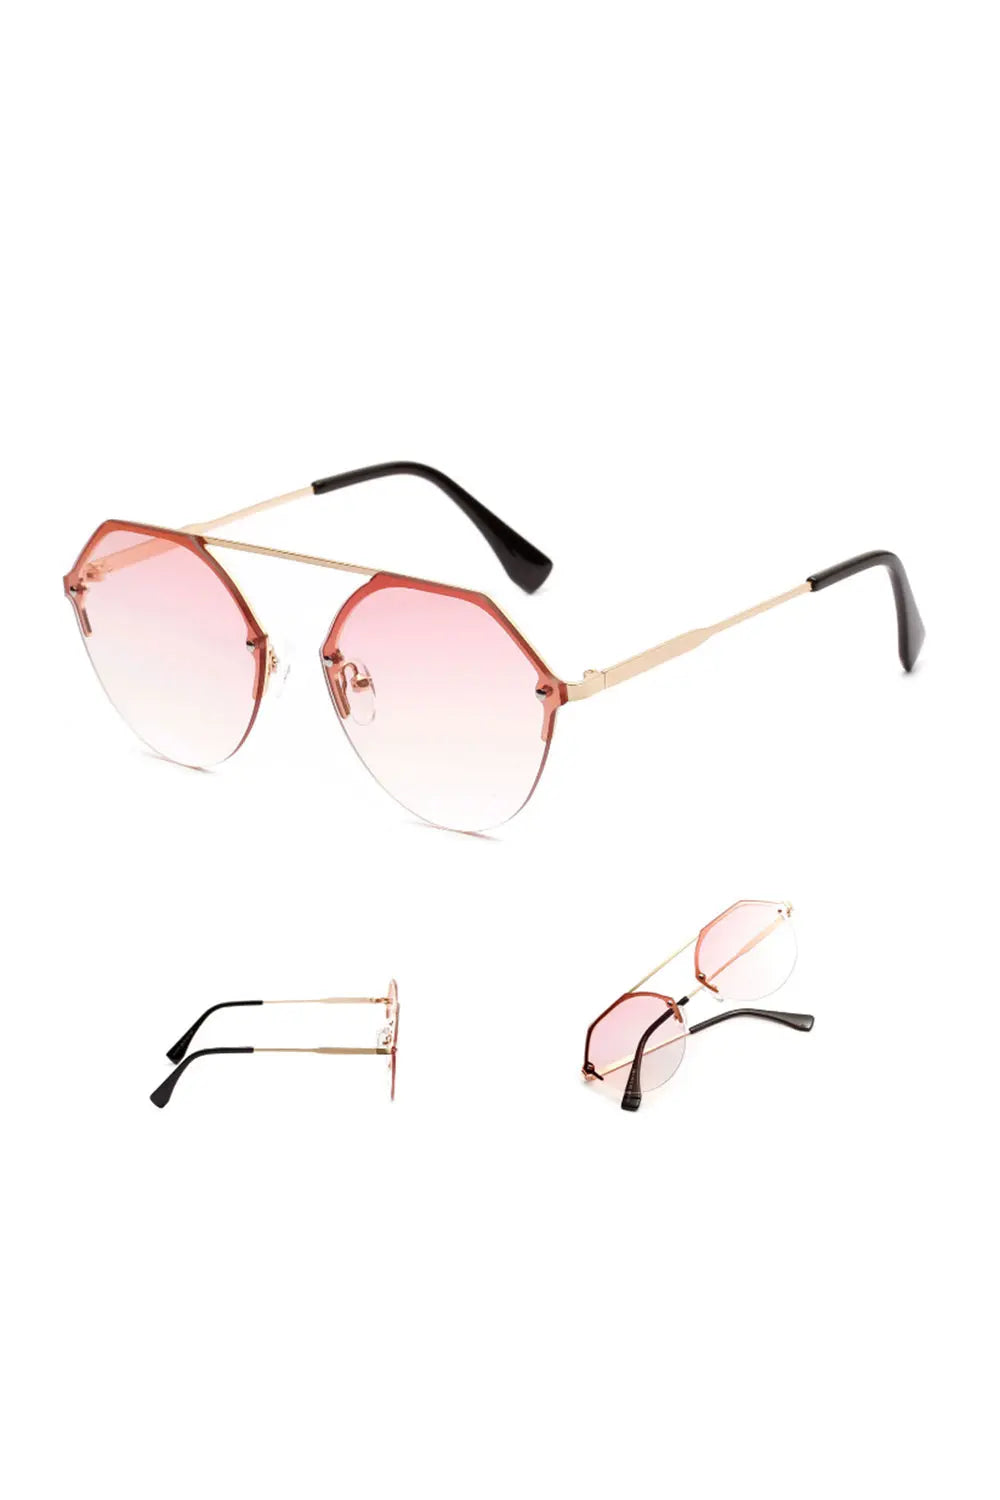 Diamond Polygon Sunglasses - Pink - Strange Clothes